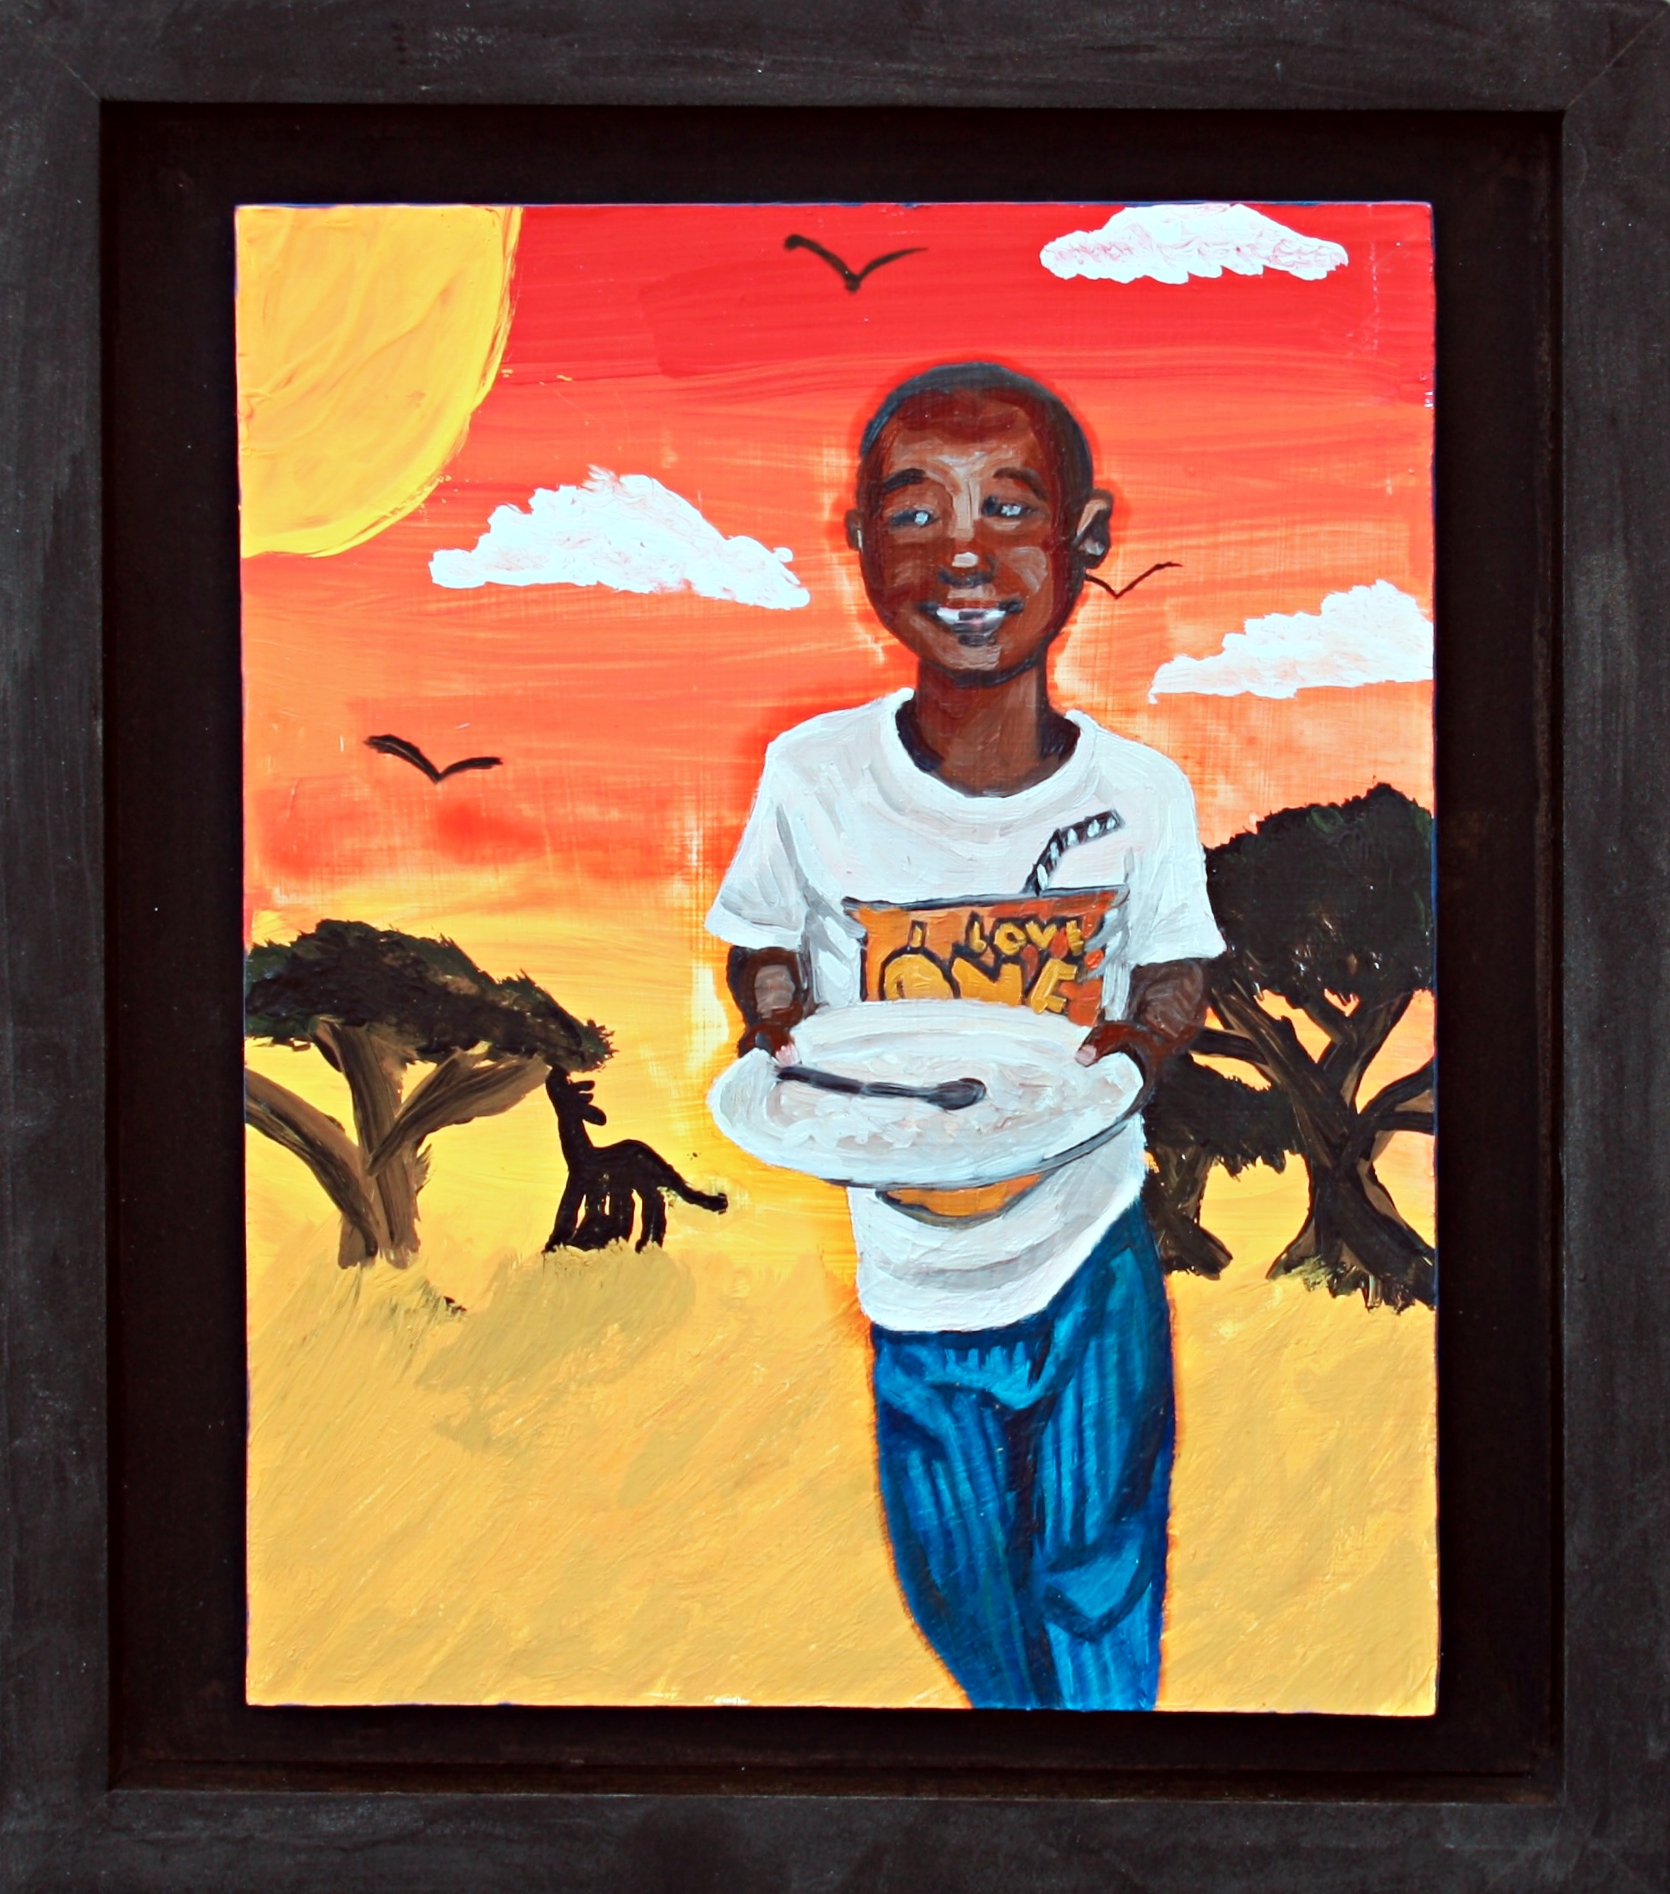 school art artist geoff phillips maple creek home of hope images children africa rwanda kenya india child baby dream centre alberta canada paint painting education fund feeding program